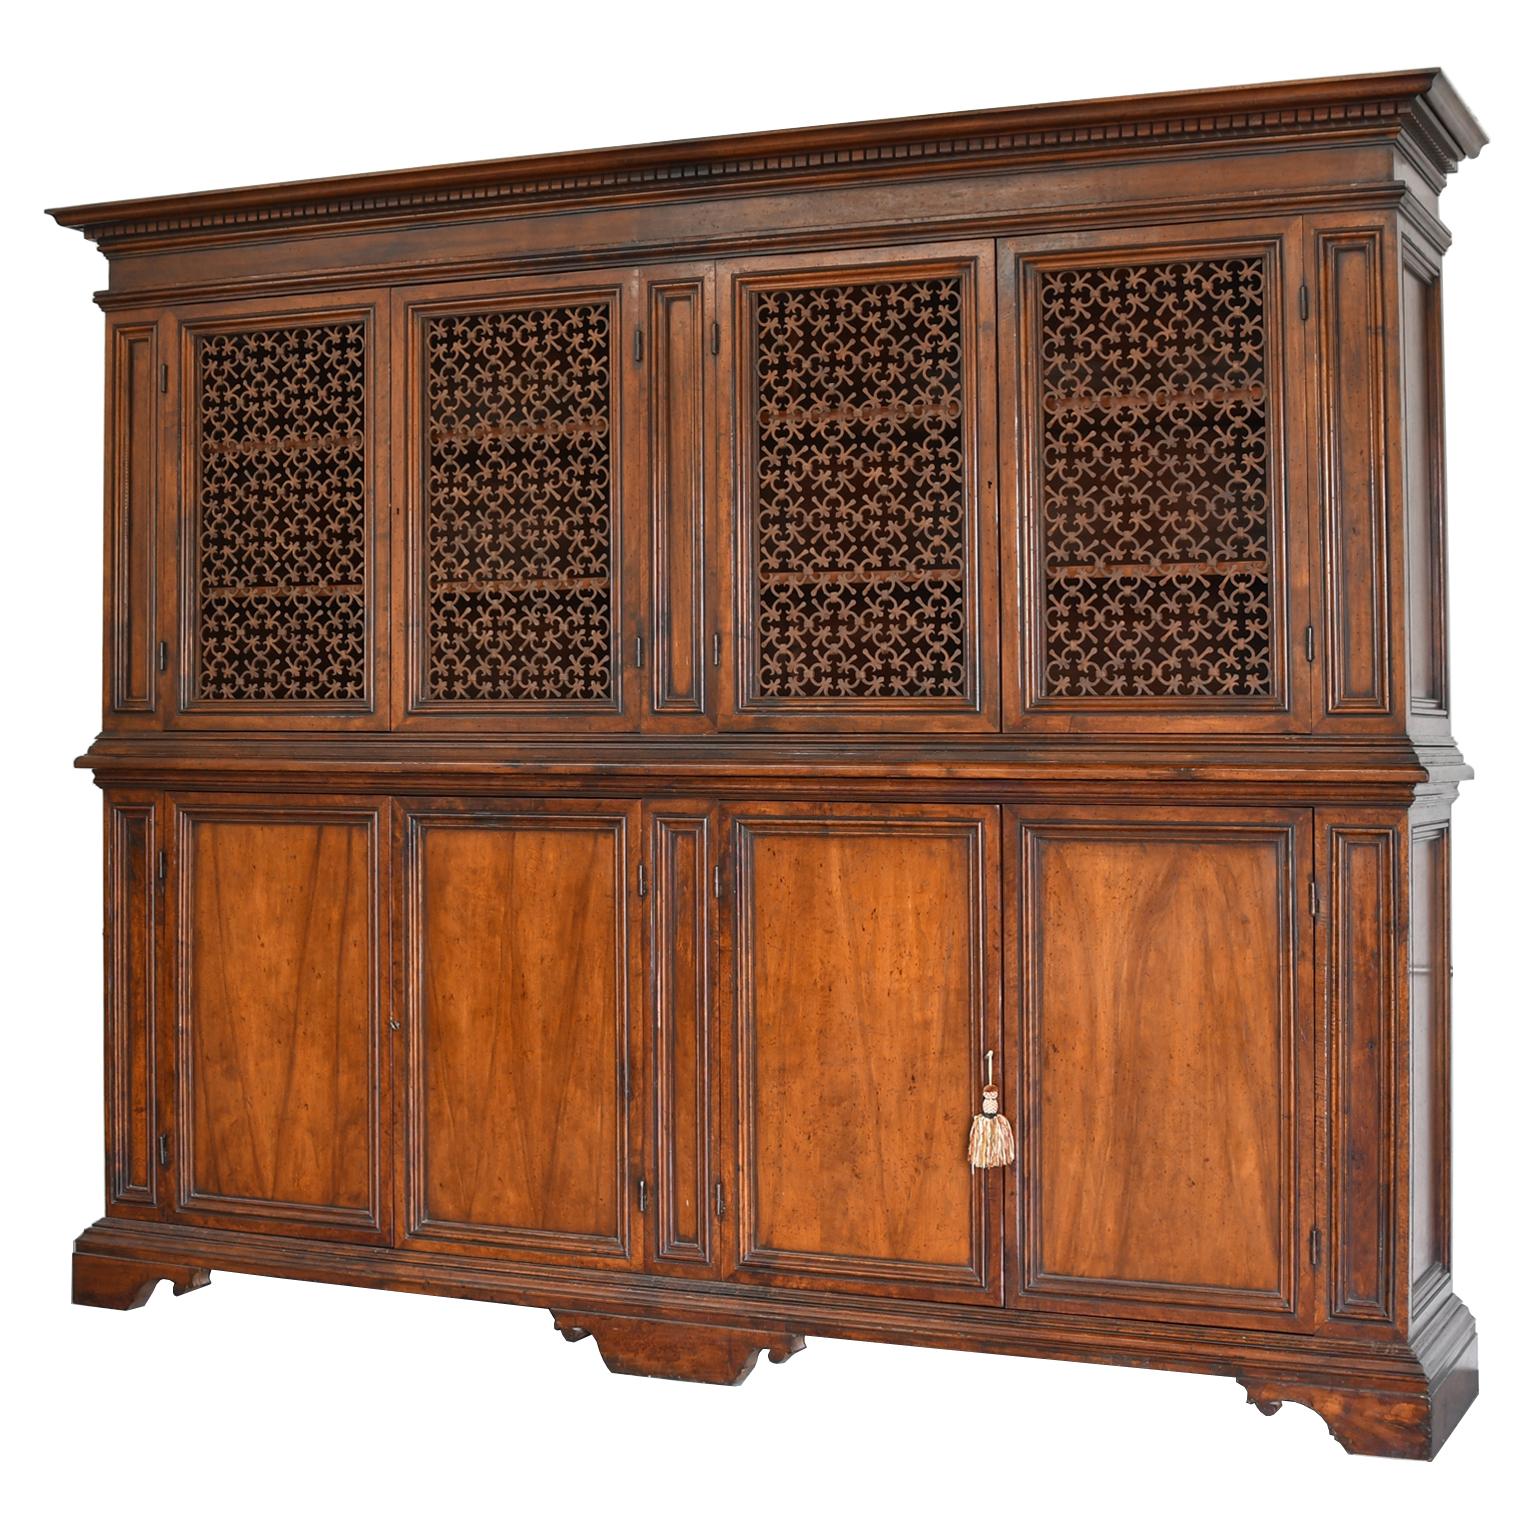 Carved Italian Renaissance Style Walnut Bookcase Cabinet with Iron Quatrefoil Panels